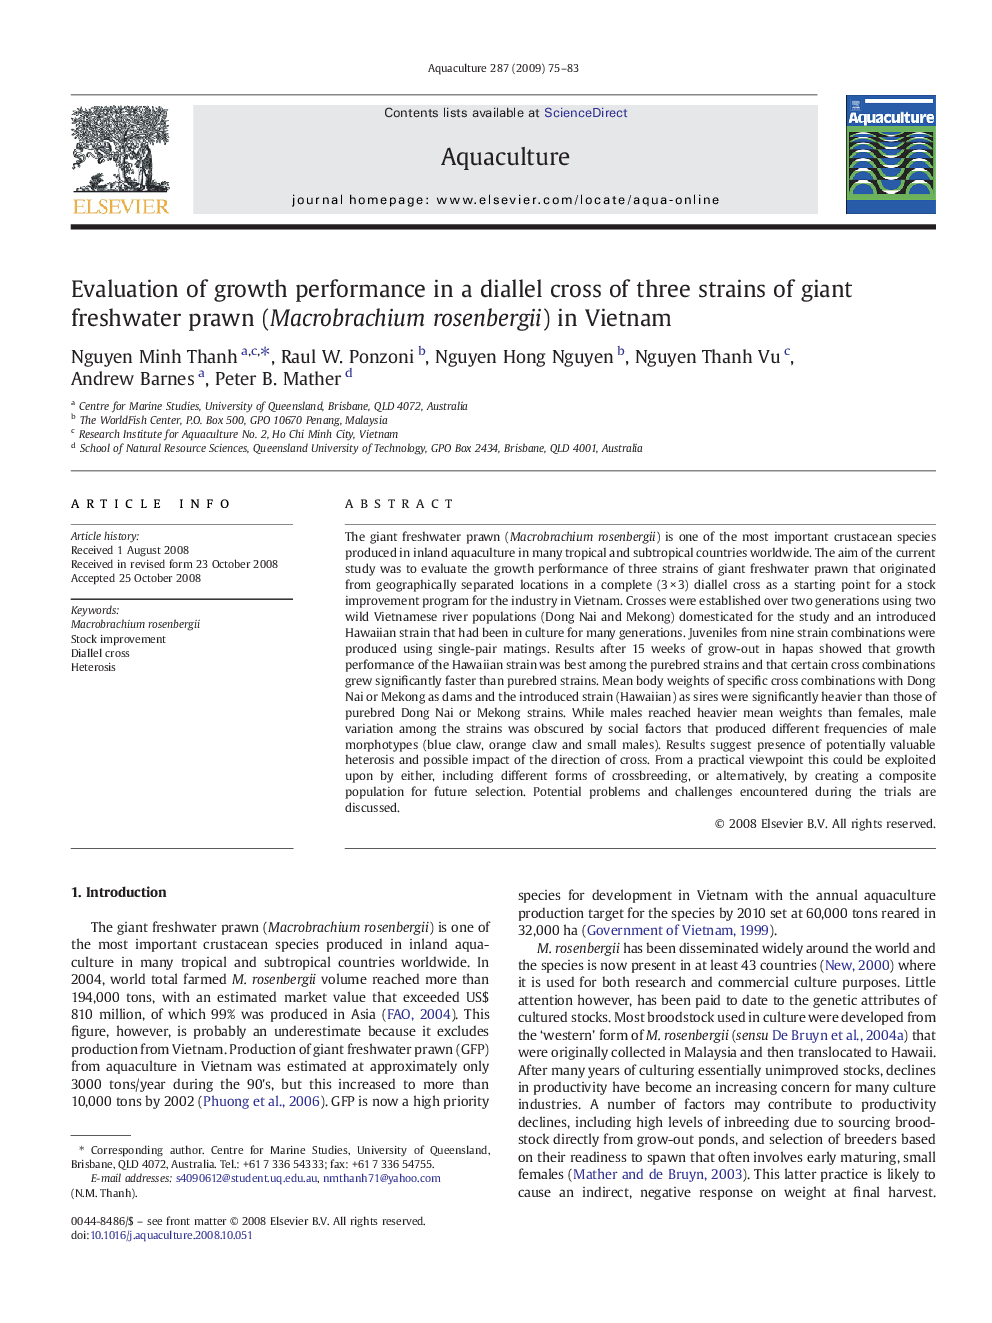 Evaluation of growth performance in a diallel cross of three strains of giant freshwater prawn (Macrobrachium rosenbergii) in Vietnam